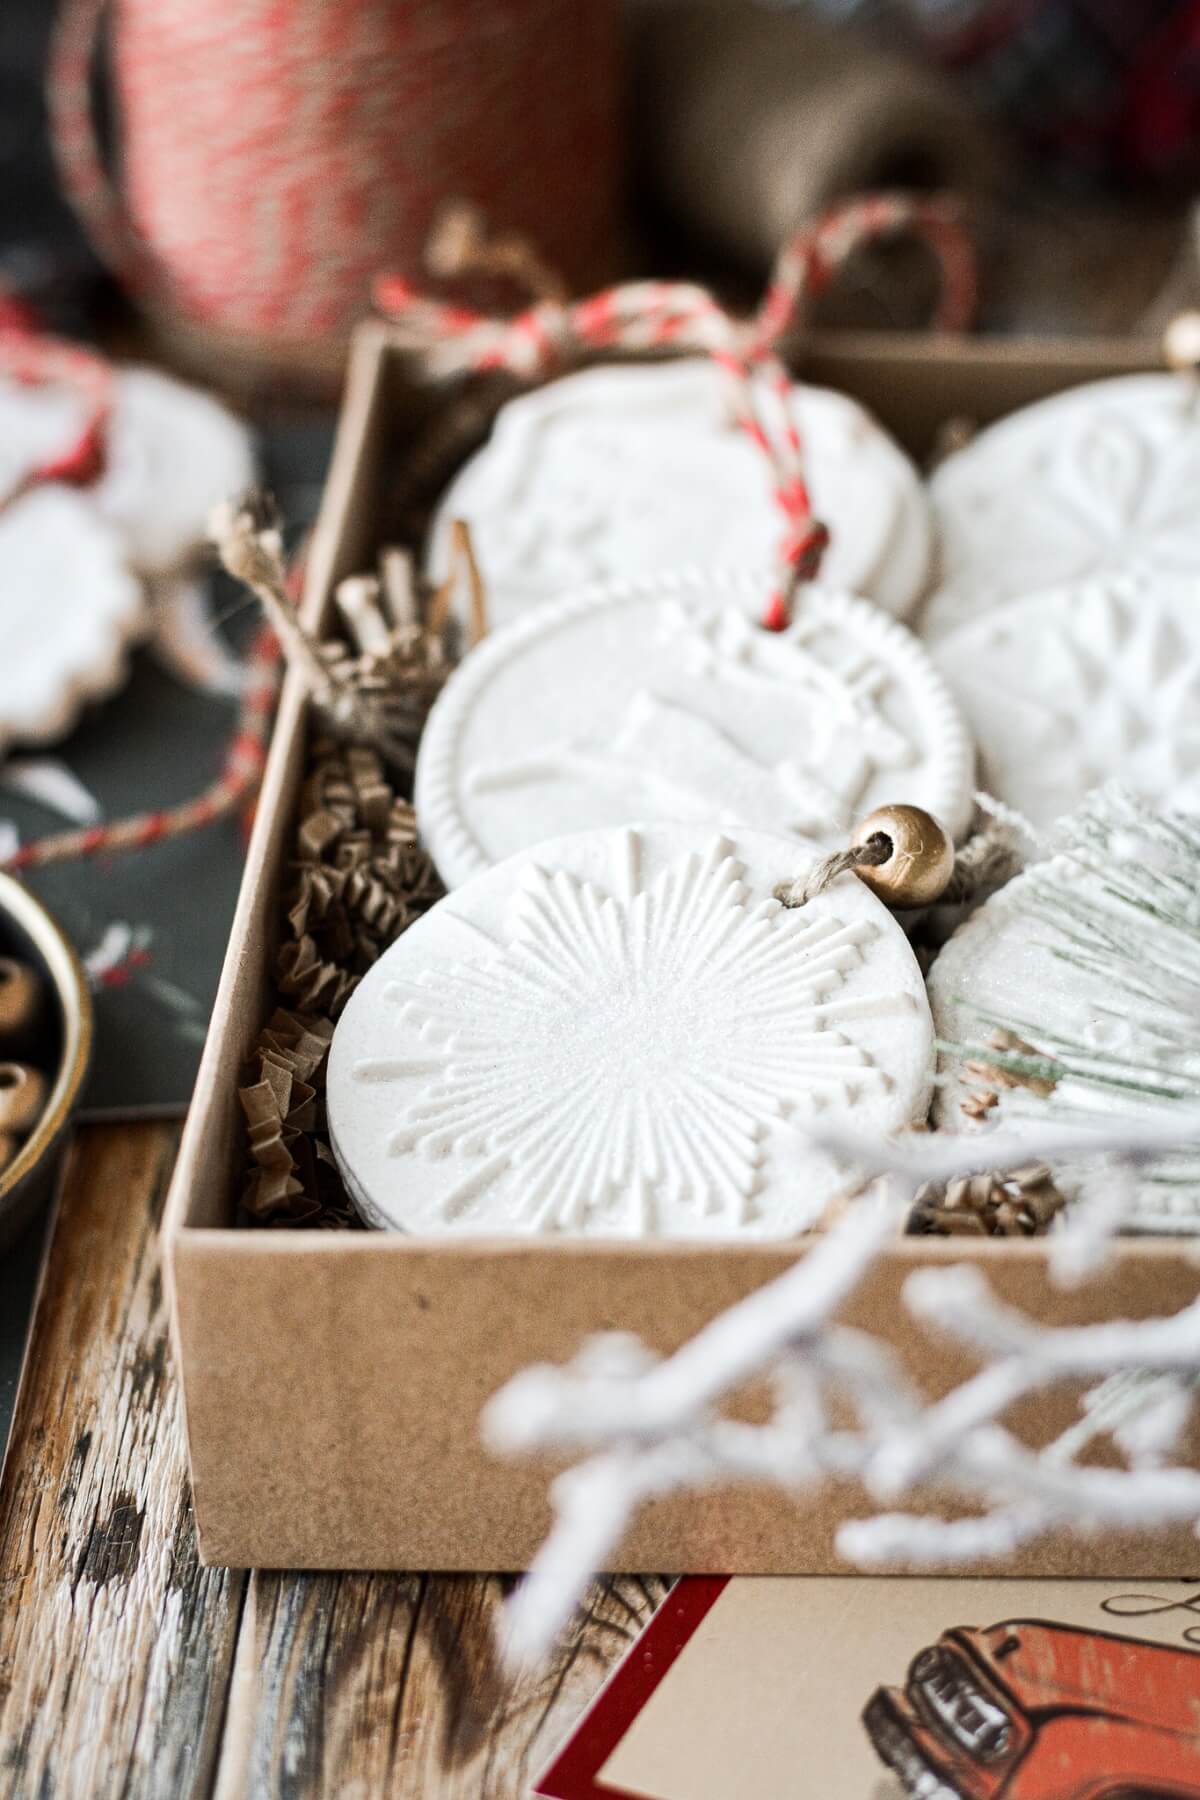 Salt dough ornaments in a gift box.